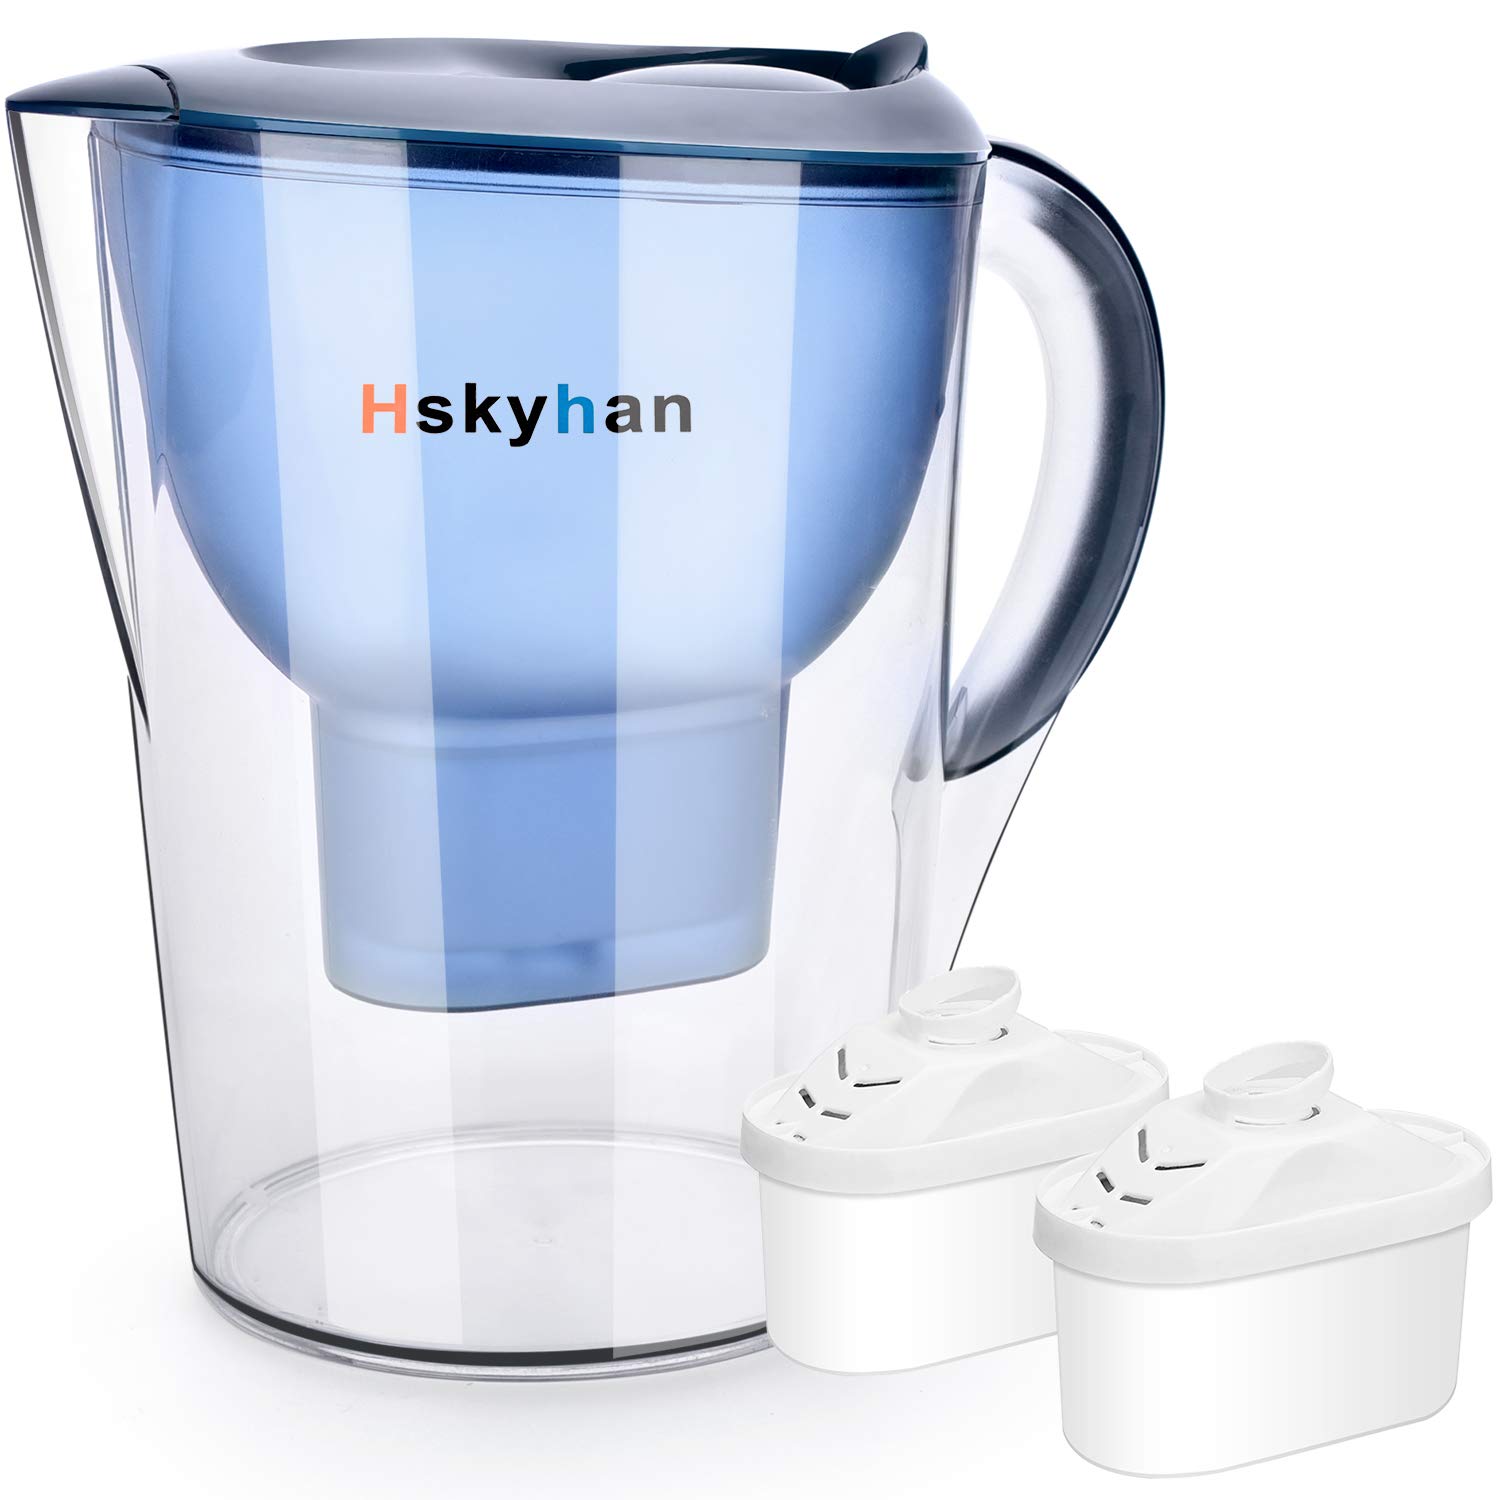 Hskyhan Alkaline Water Filter Pitcher, 3.5 Liters